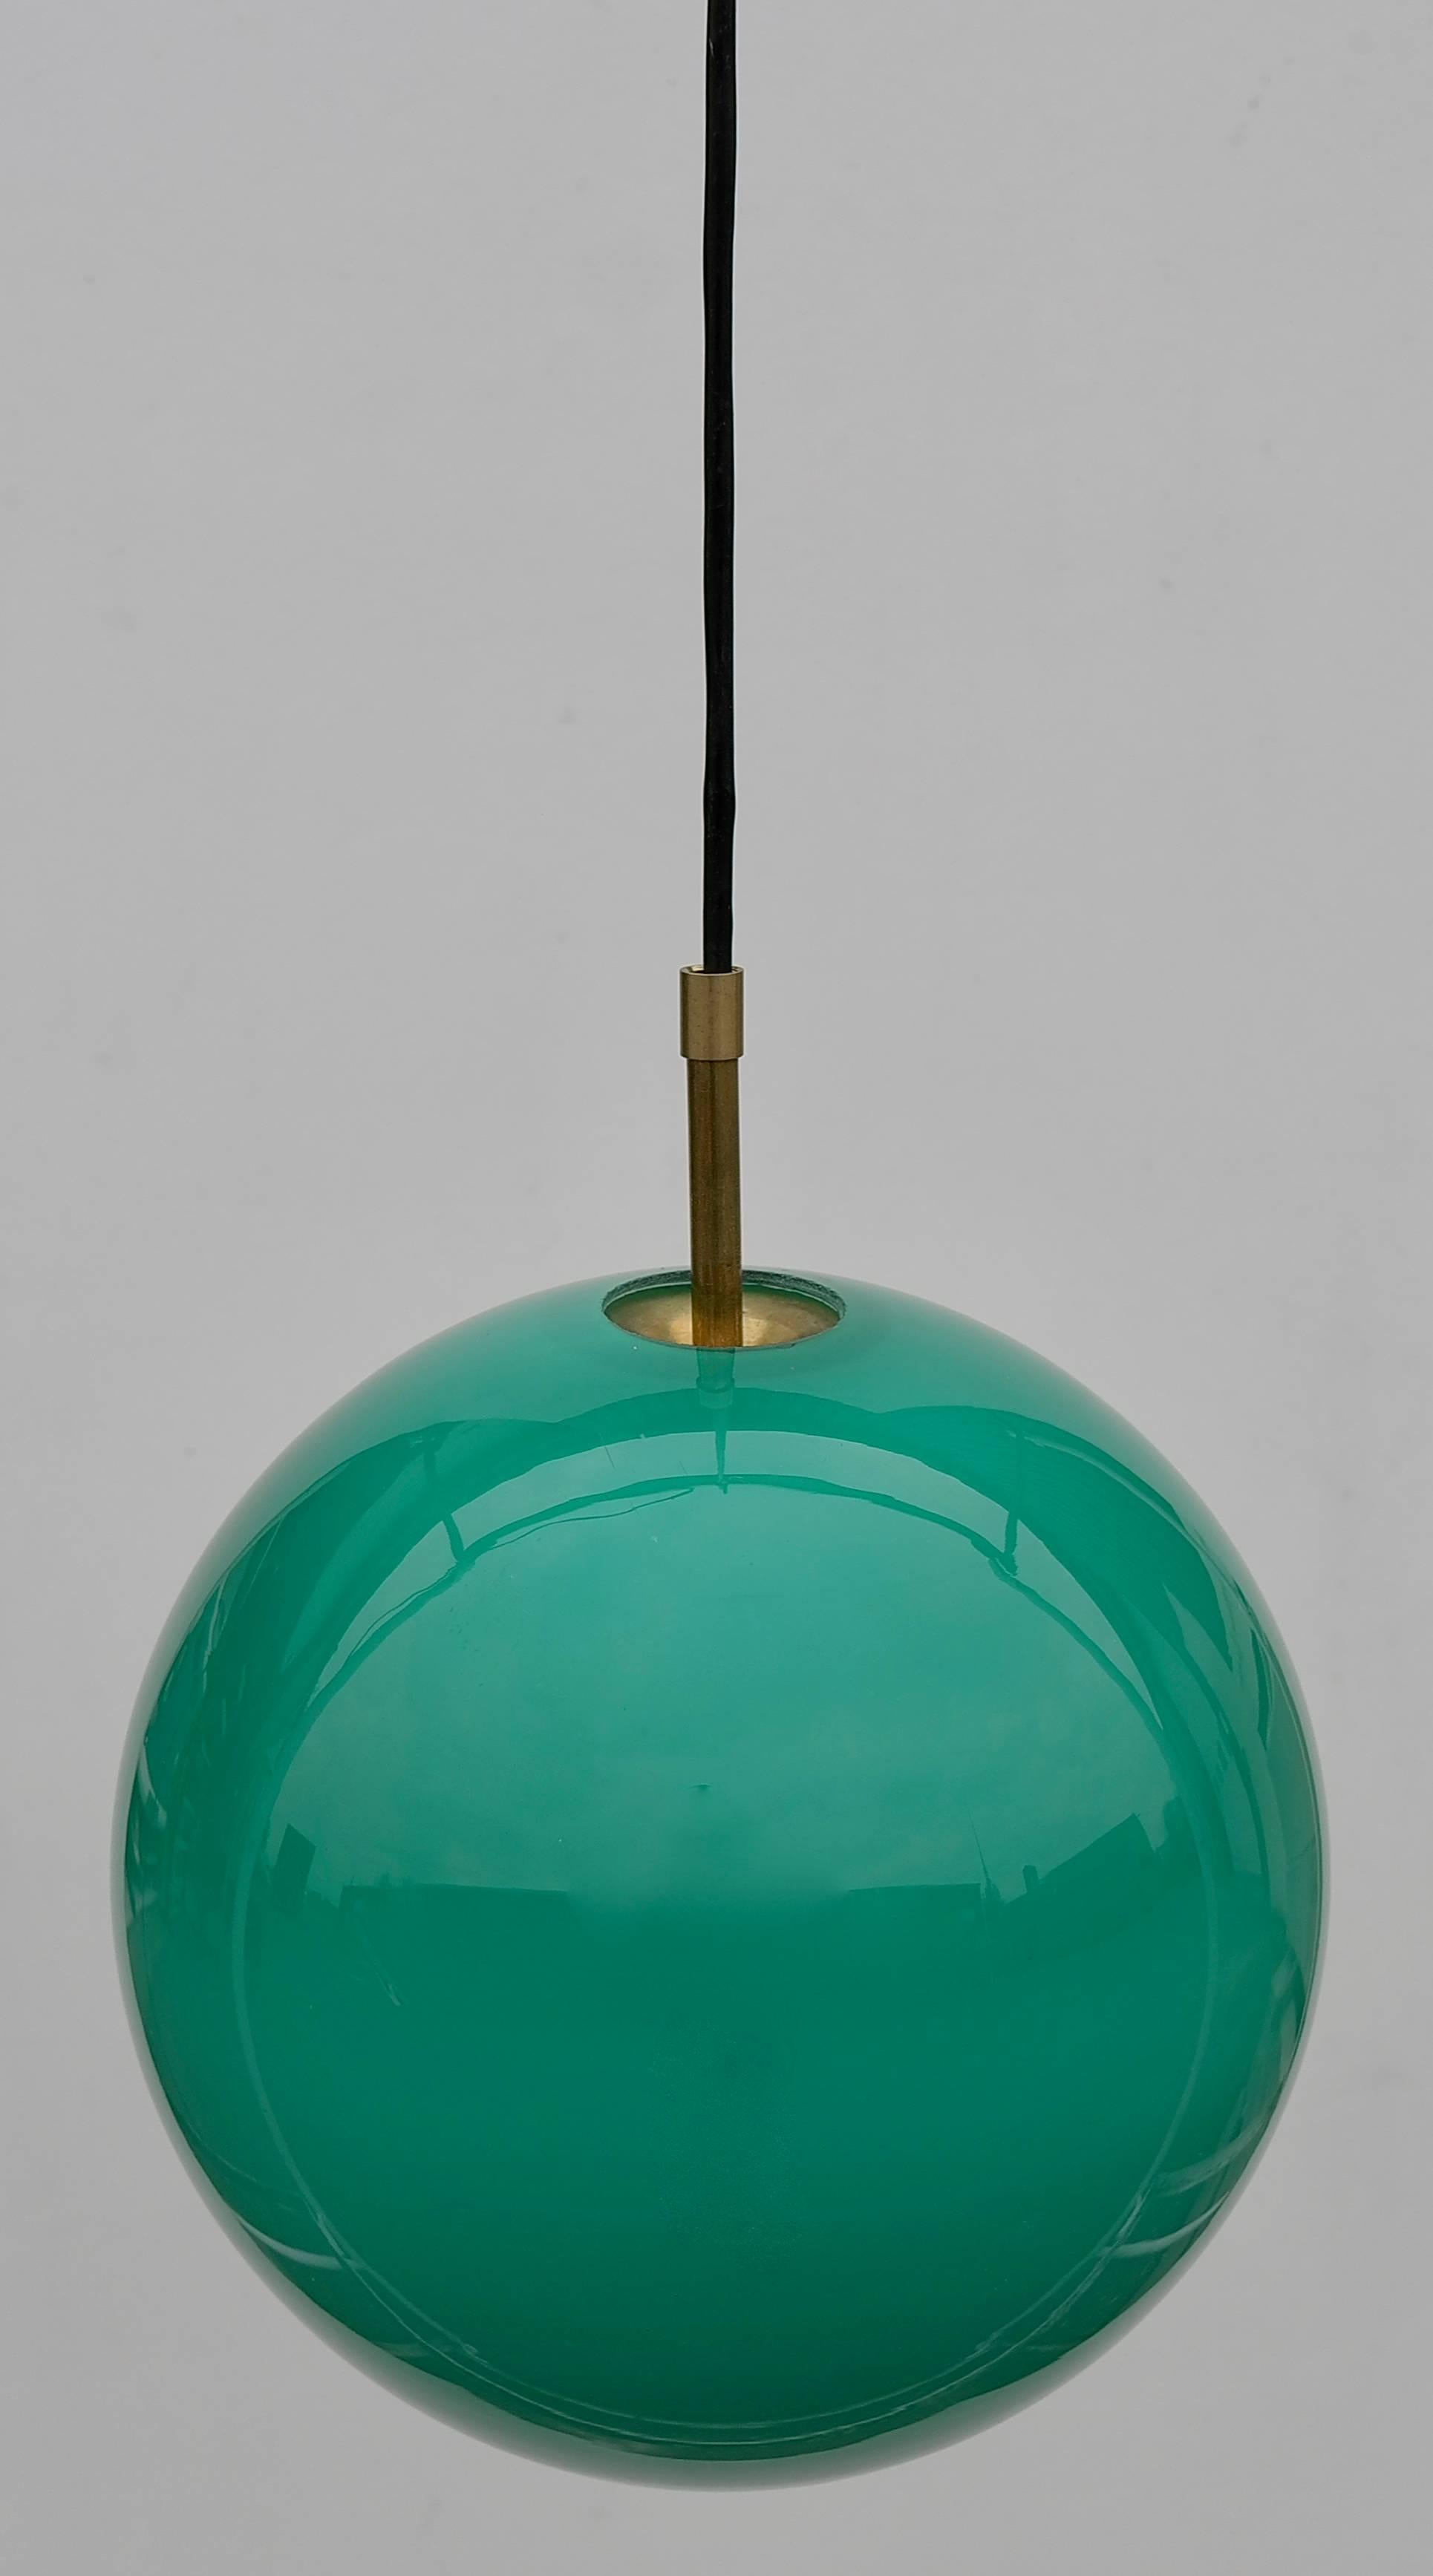 3x Uno & Östen Kristiansson Glass Pendant Lamp in Jade Color, Sweden, 1960s For Sale 2